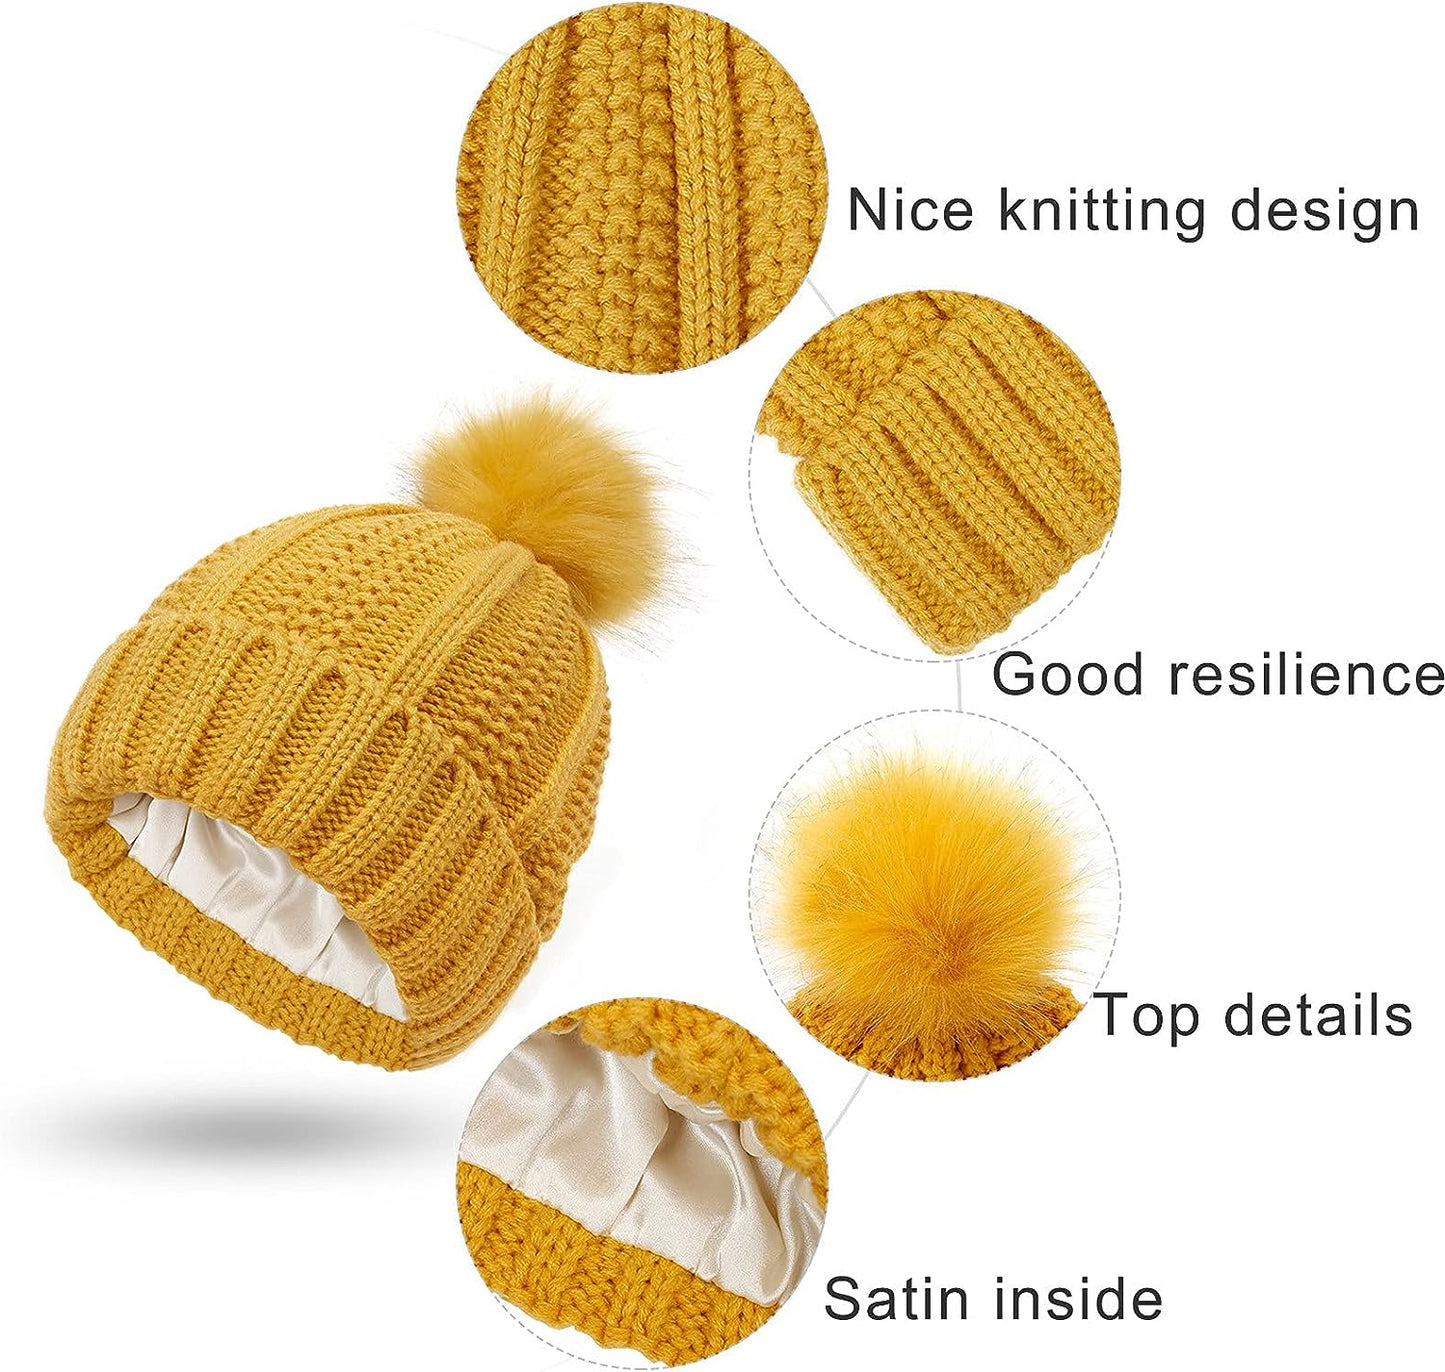 Knit Beanie w/ Pom Pom - Satin-Lined (Multiple Colors)